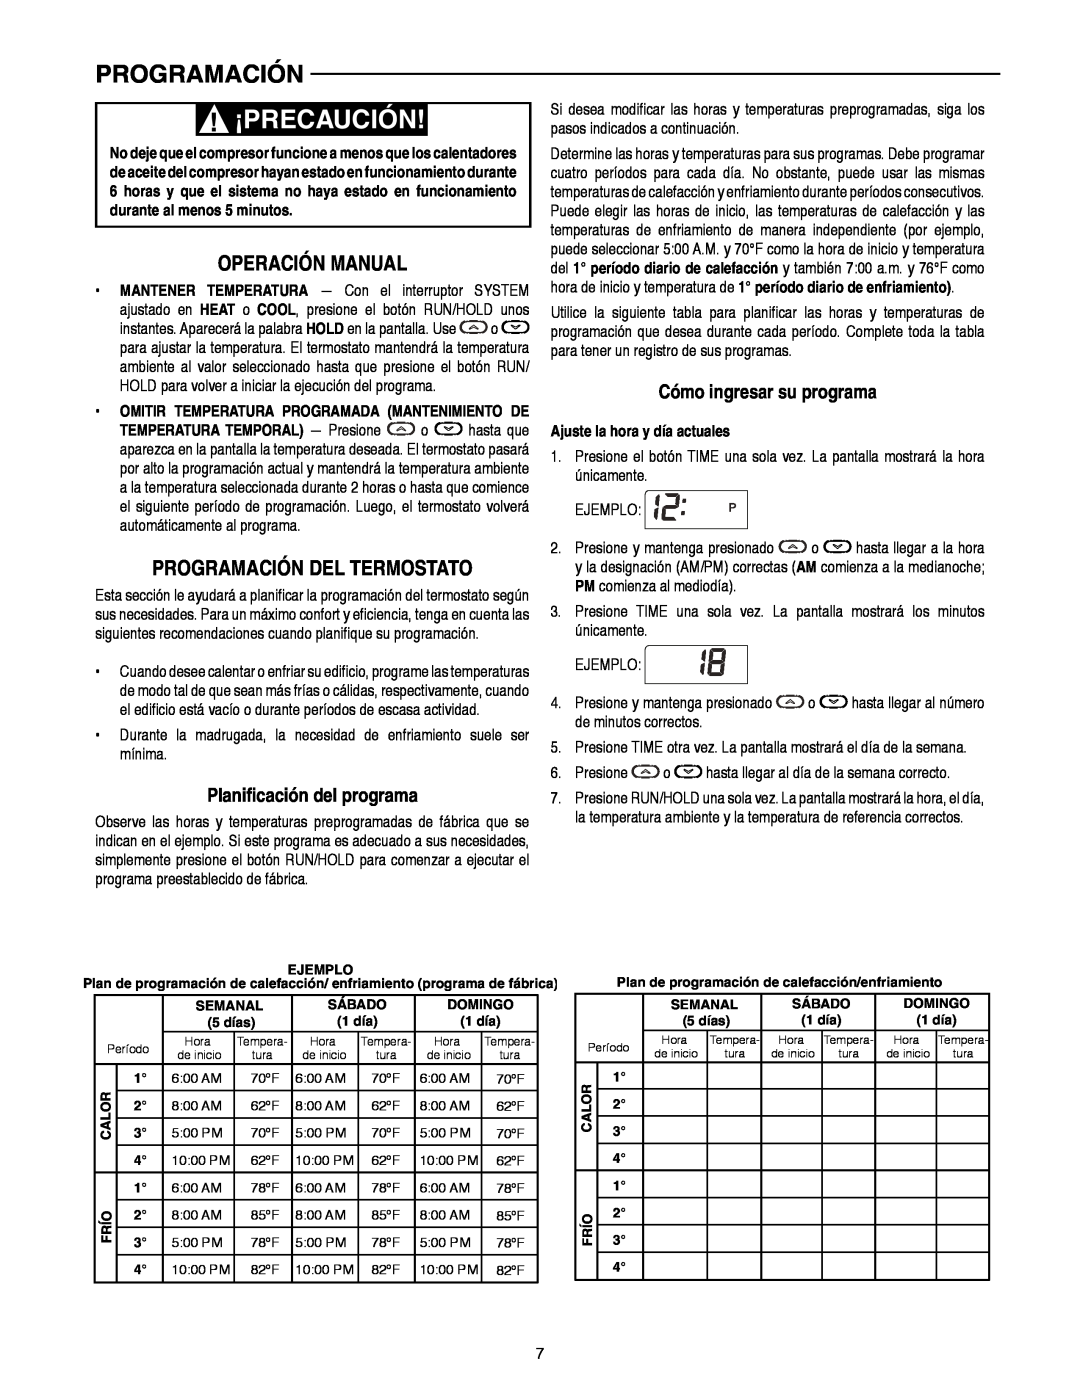 White Rodgers 1F82-0261 manual Operación Manual, Programación Del Termostato, Planificación del programa, ¡Precaución 